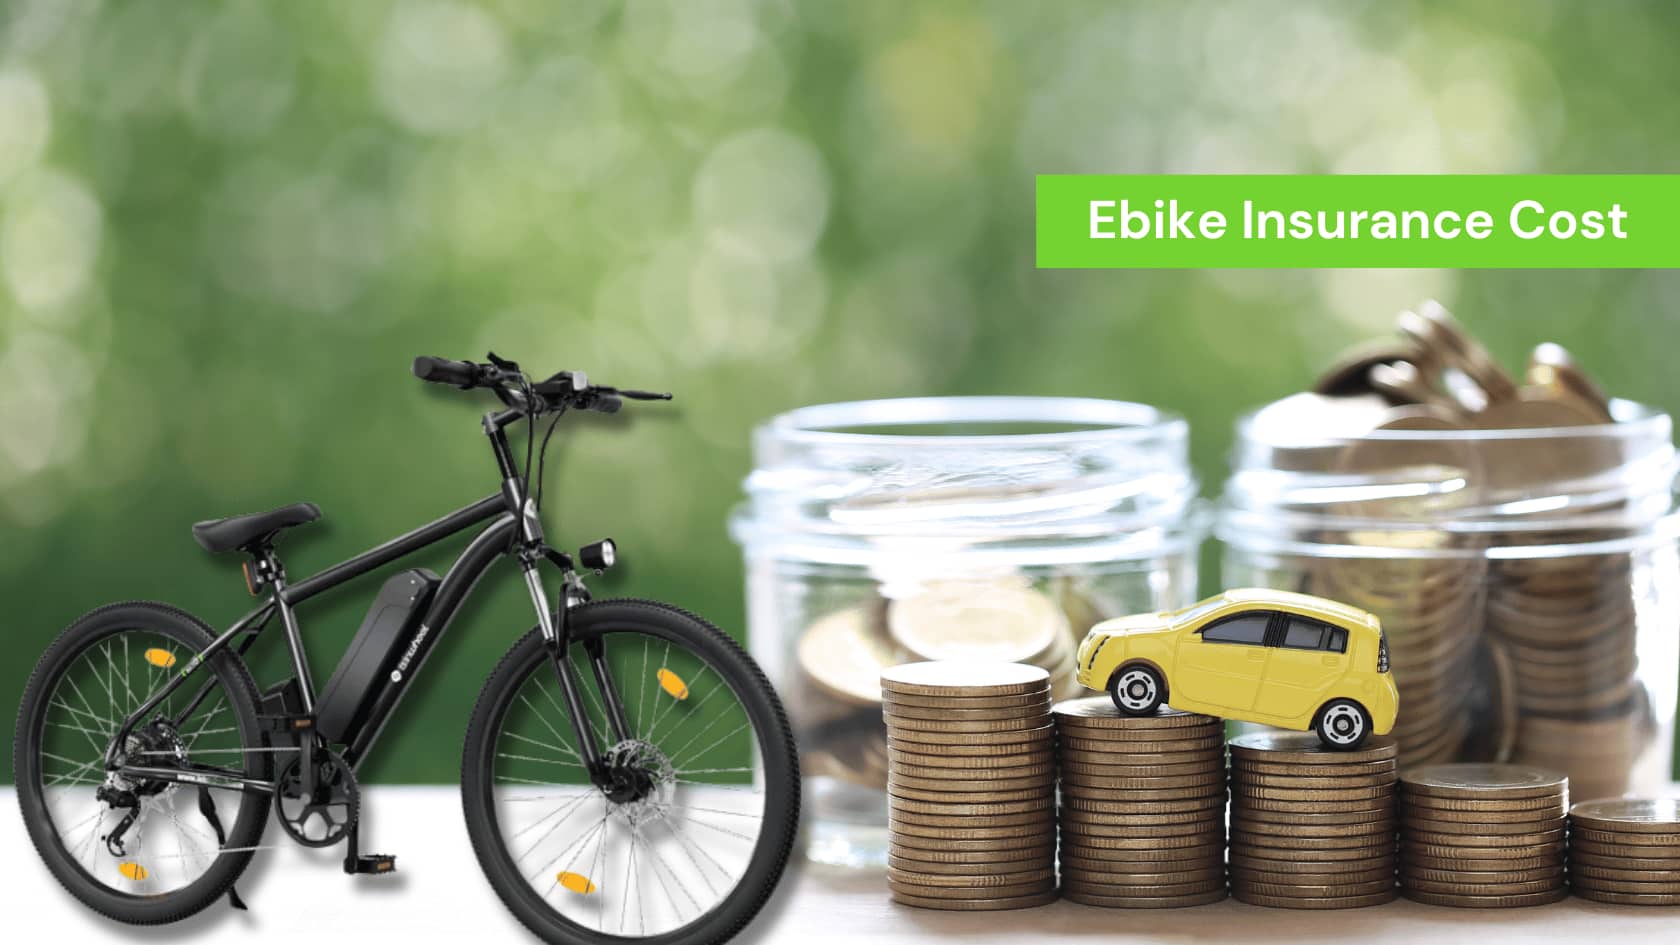 Ebike Insurance Cost